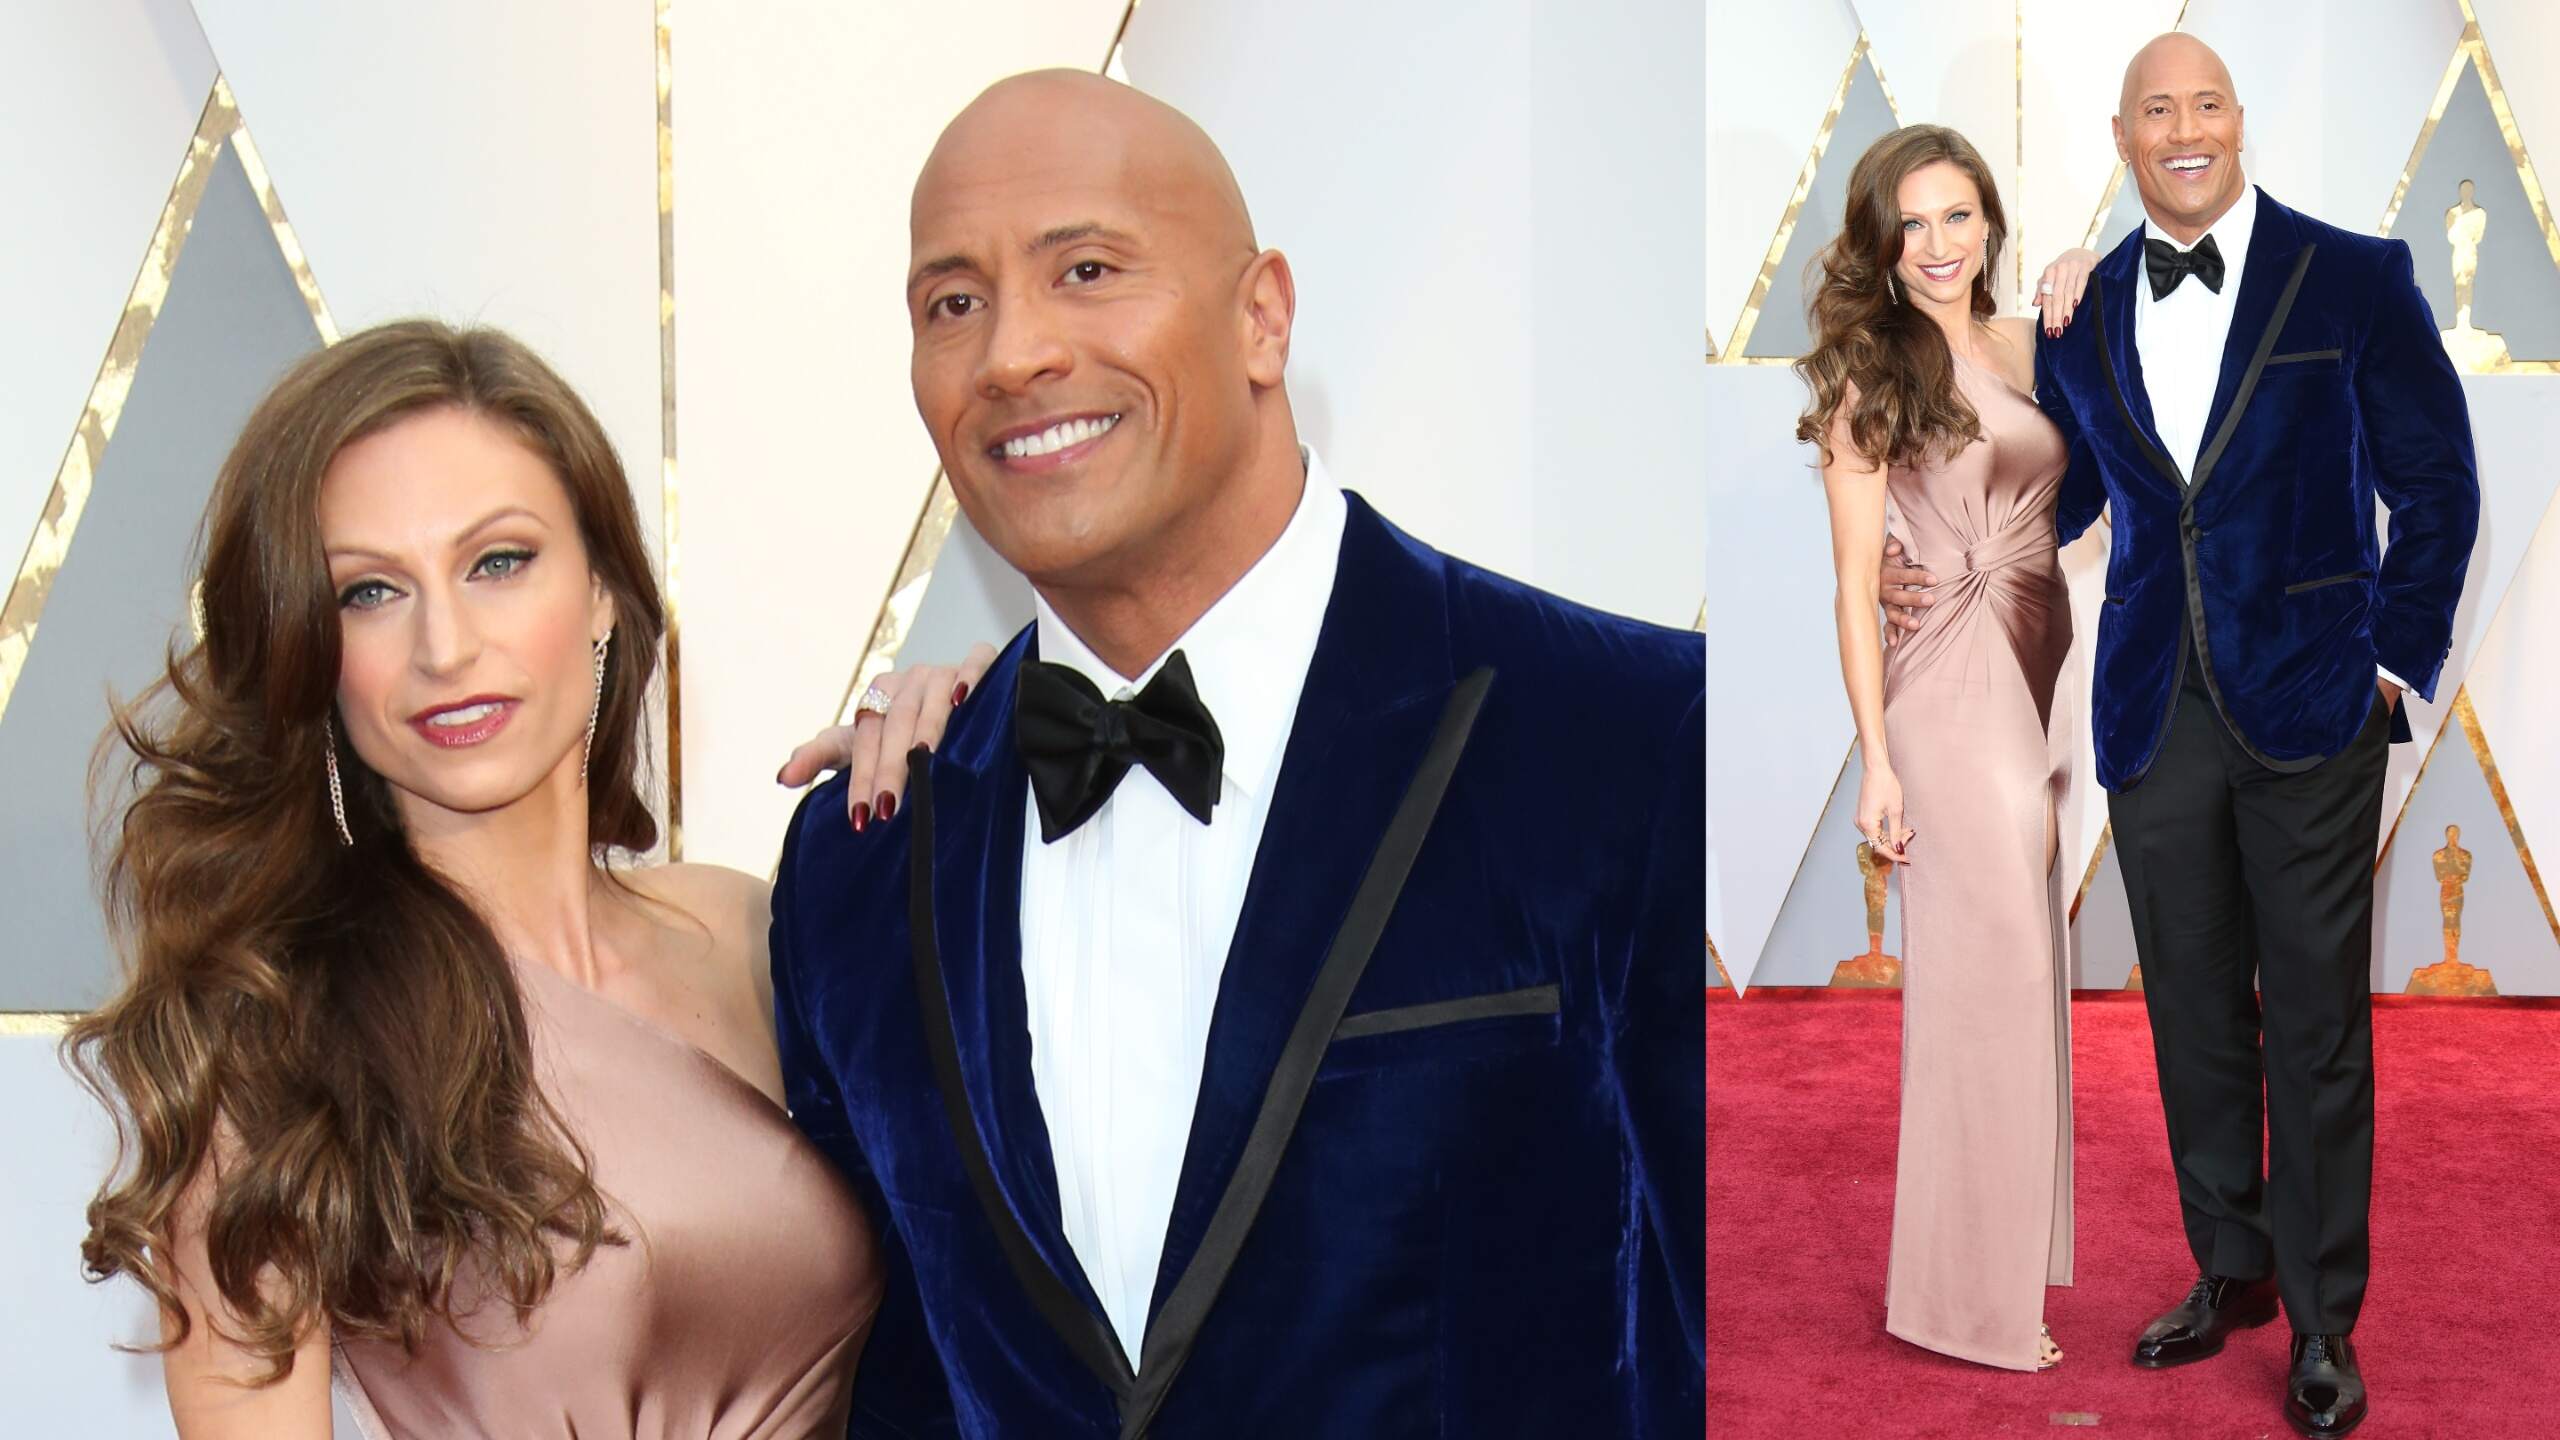 Wearing a blue velvet jacket, Dwayne Johnson walks the red carpet at the Academy Awards